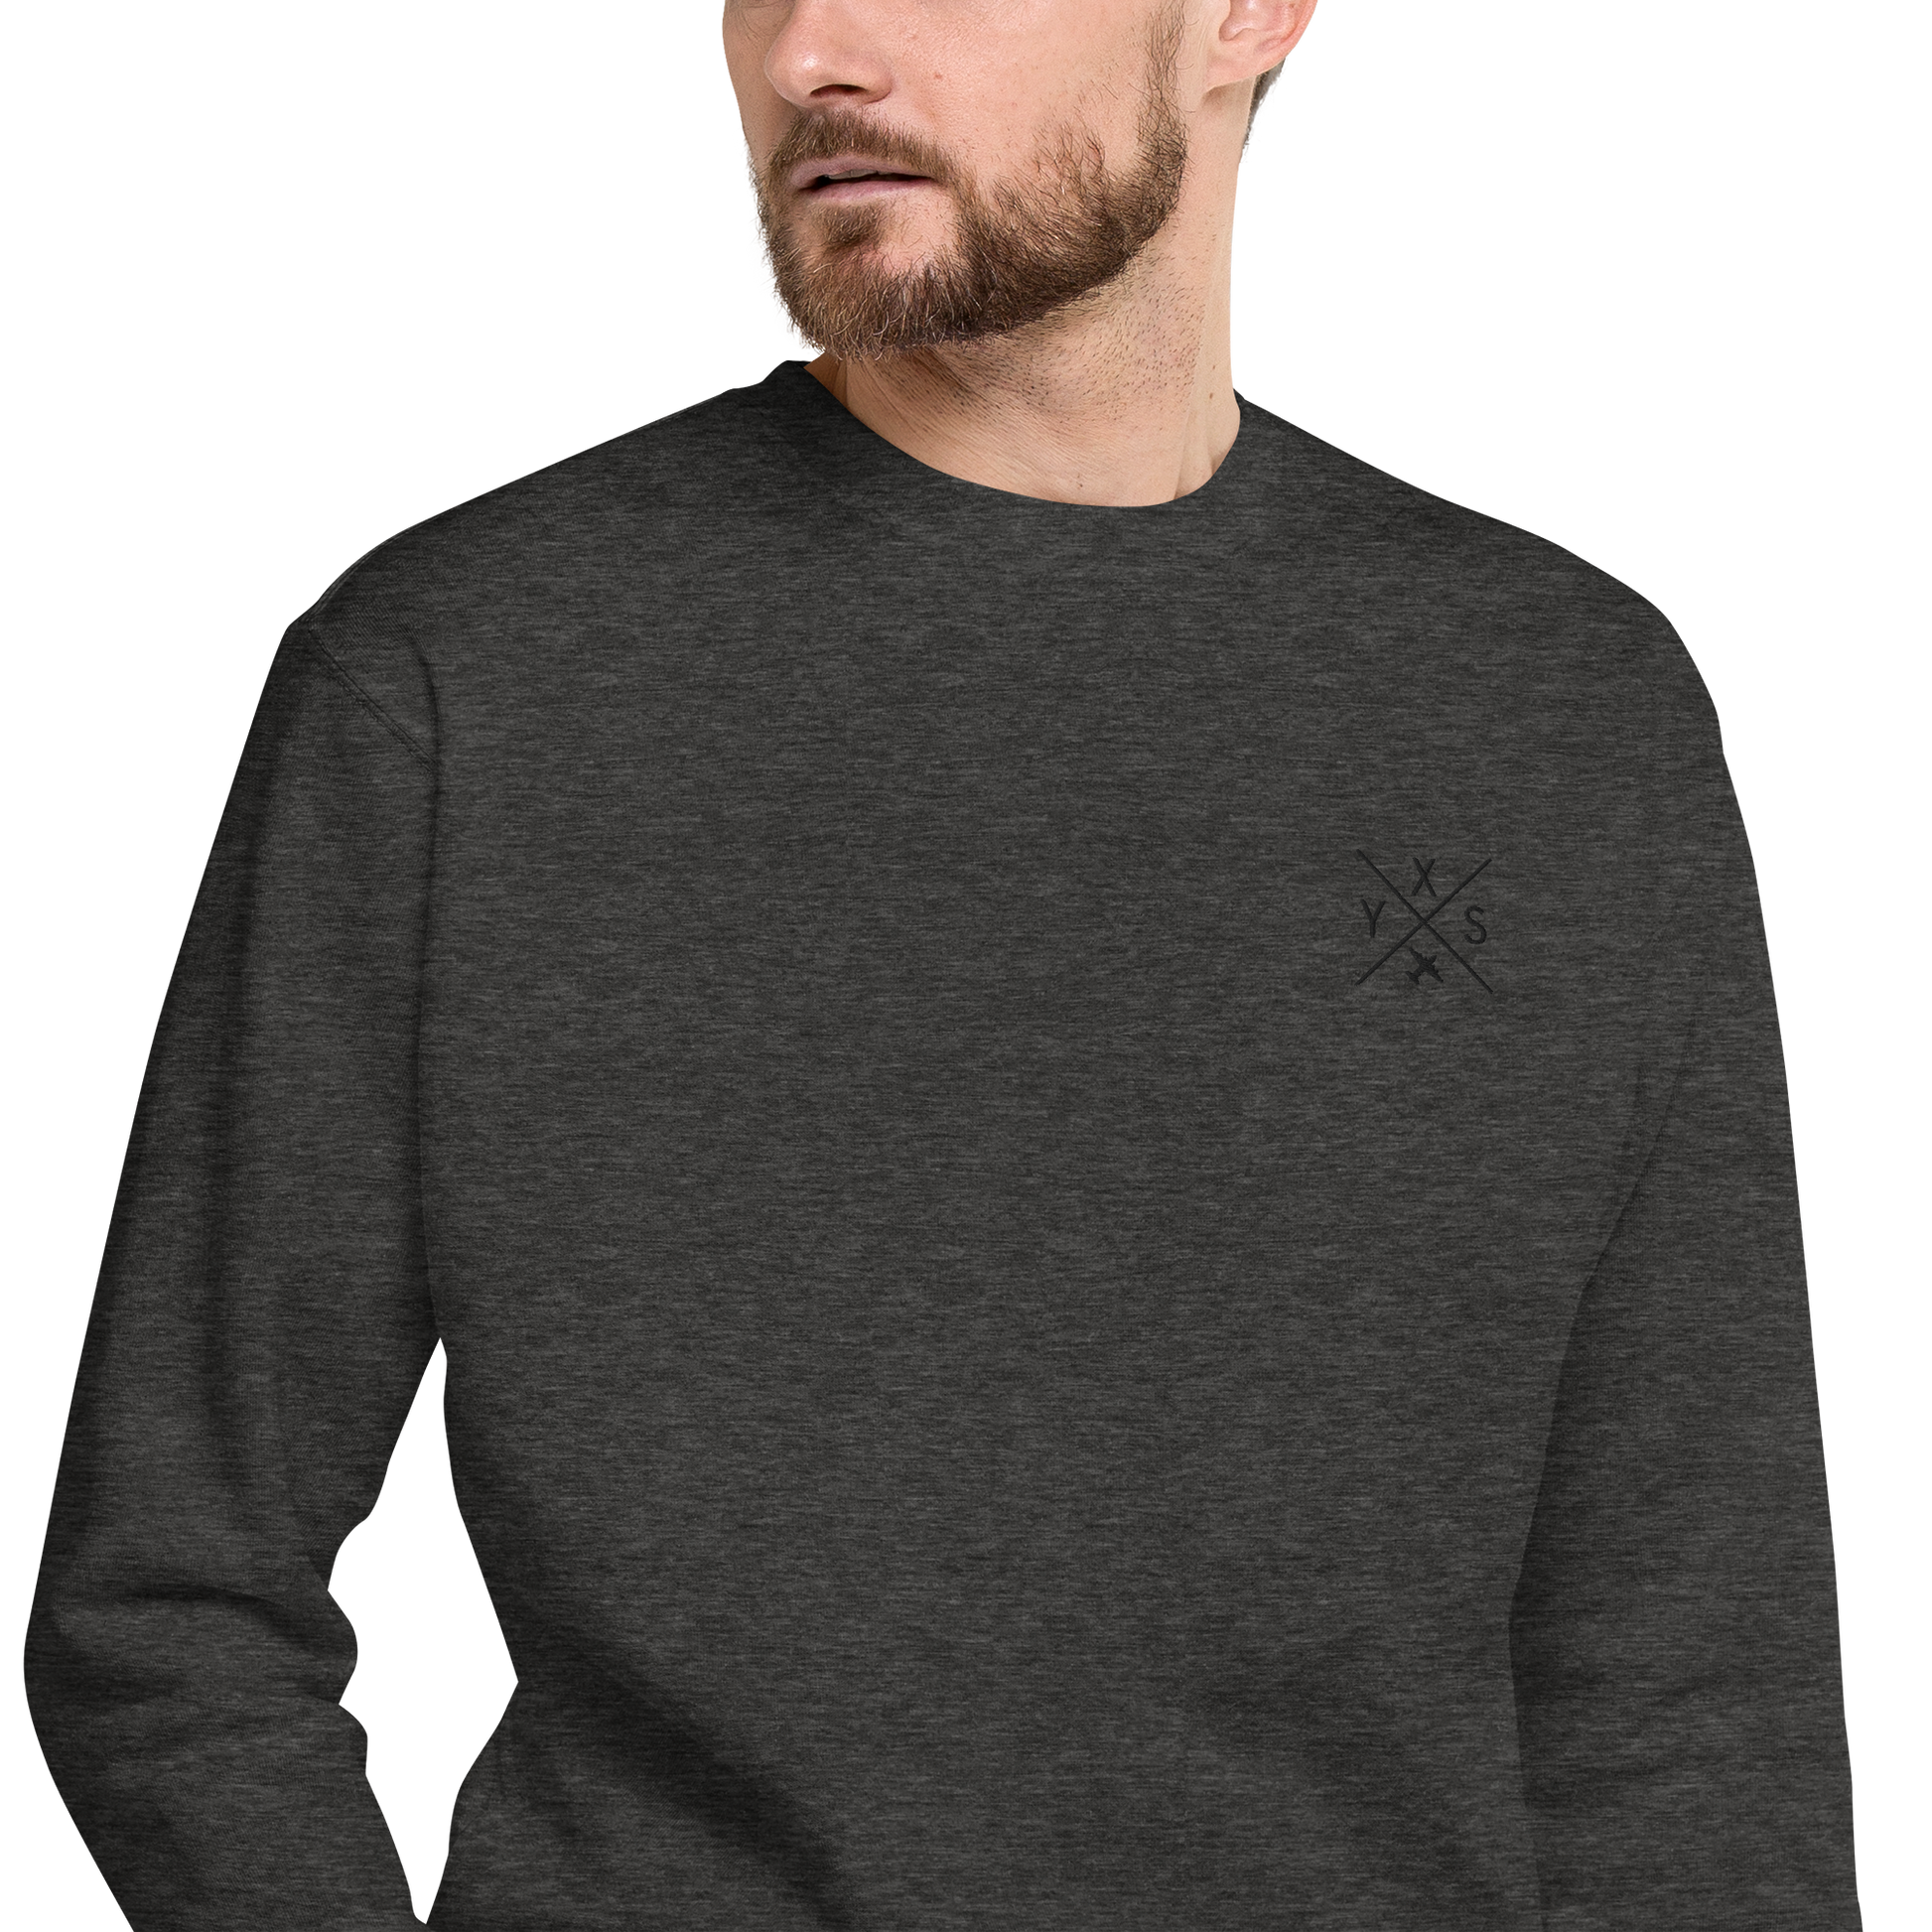 YHM Designs - YXS Prince George Premium Sweatshirt - Crossed-X Design with Airport Code and Vintage Propliner - Black Embroidery - Image 07